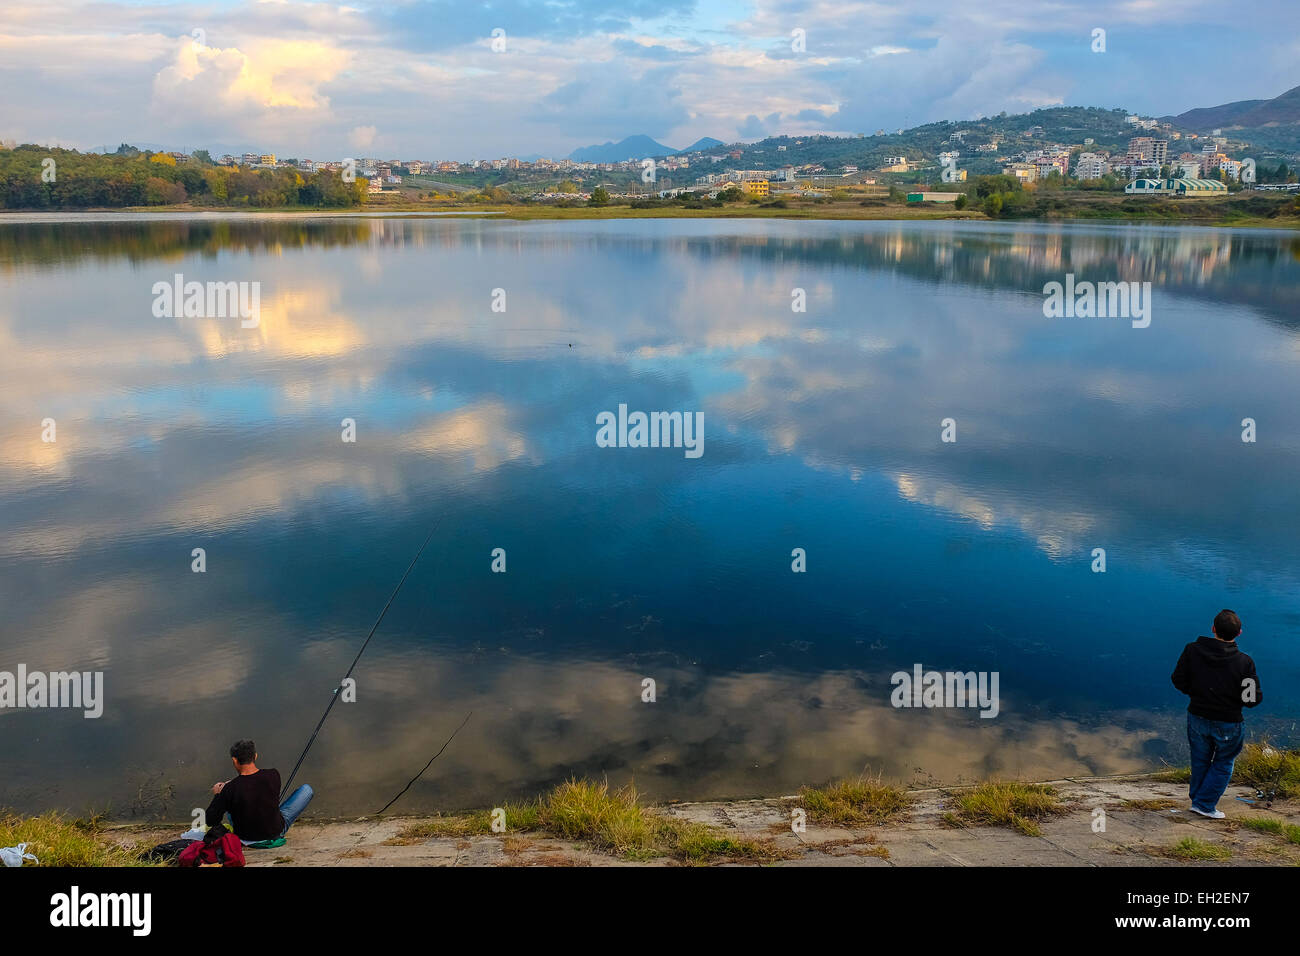 Albania, Tirana, the artificial Lake zone and park Stock Photo